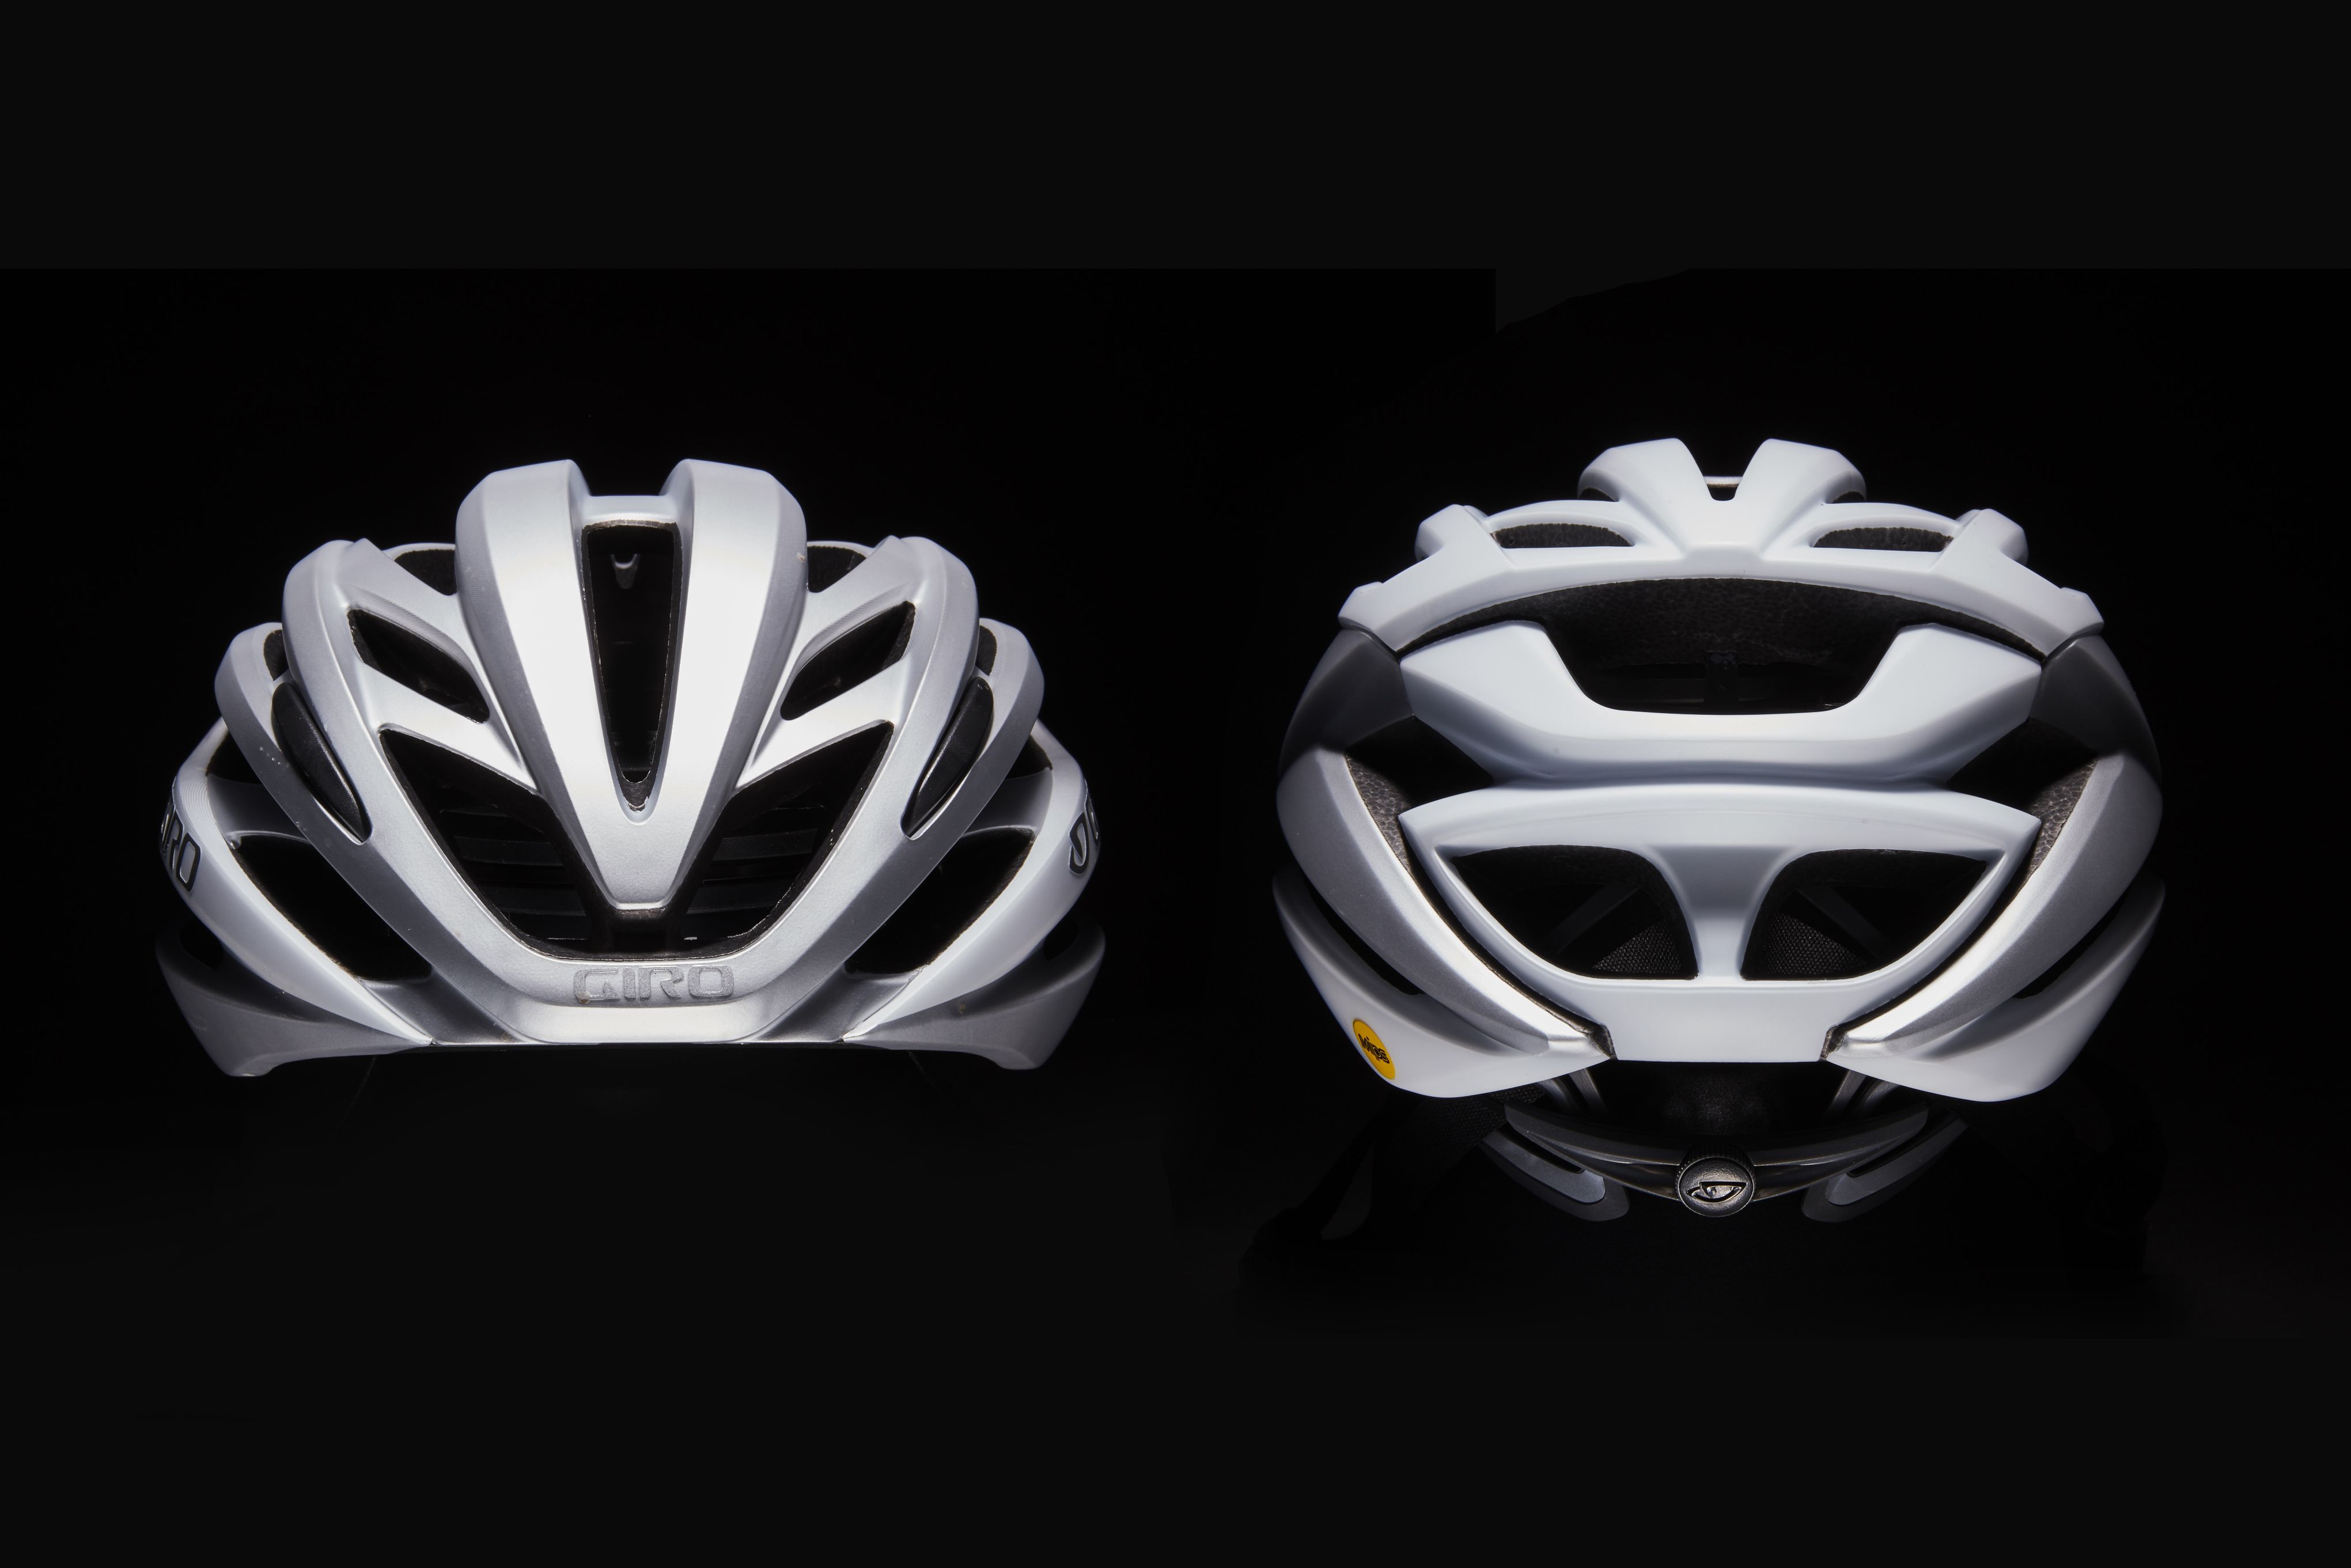 giro syntax mips road cycling helmet